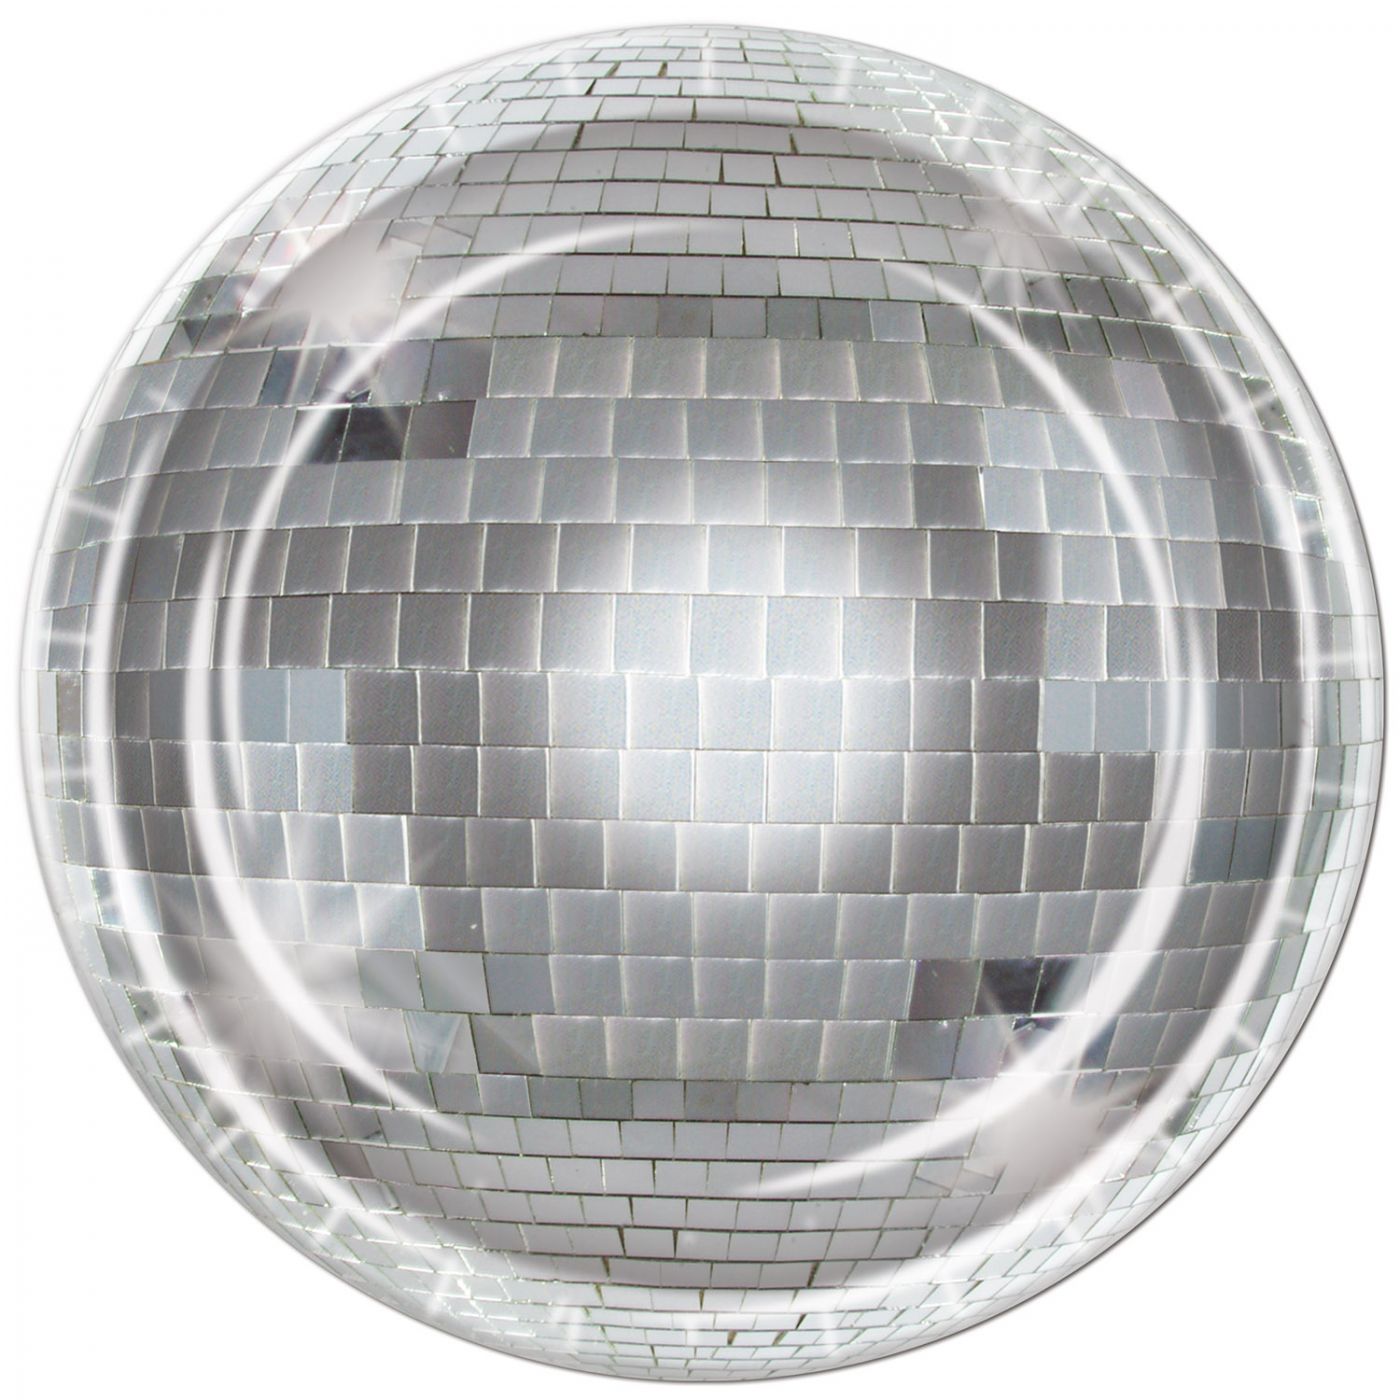 Disco Ball Plates image